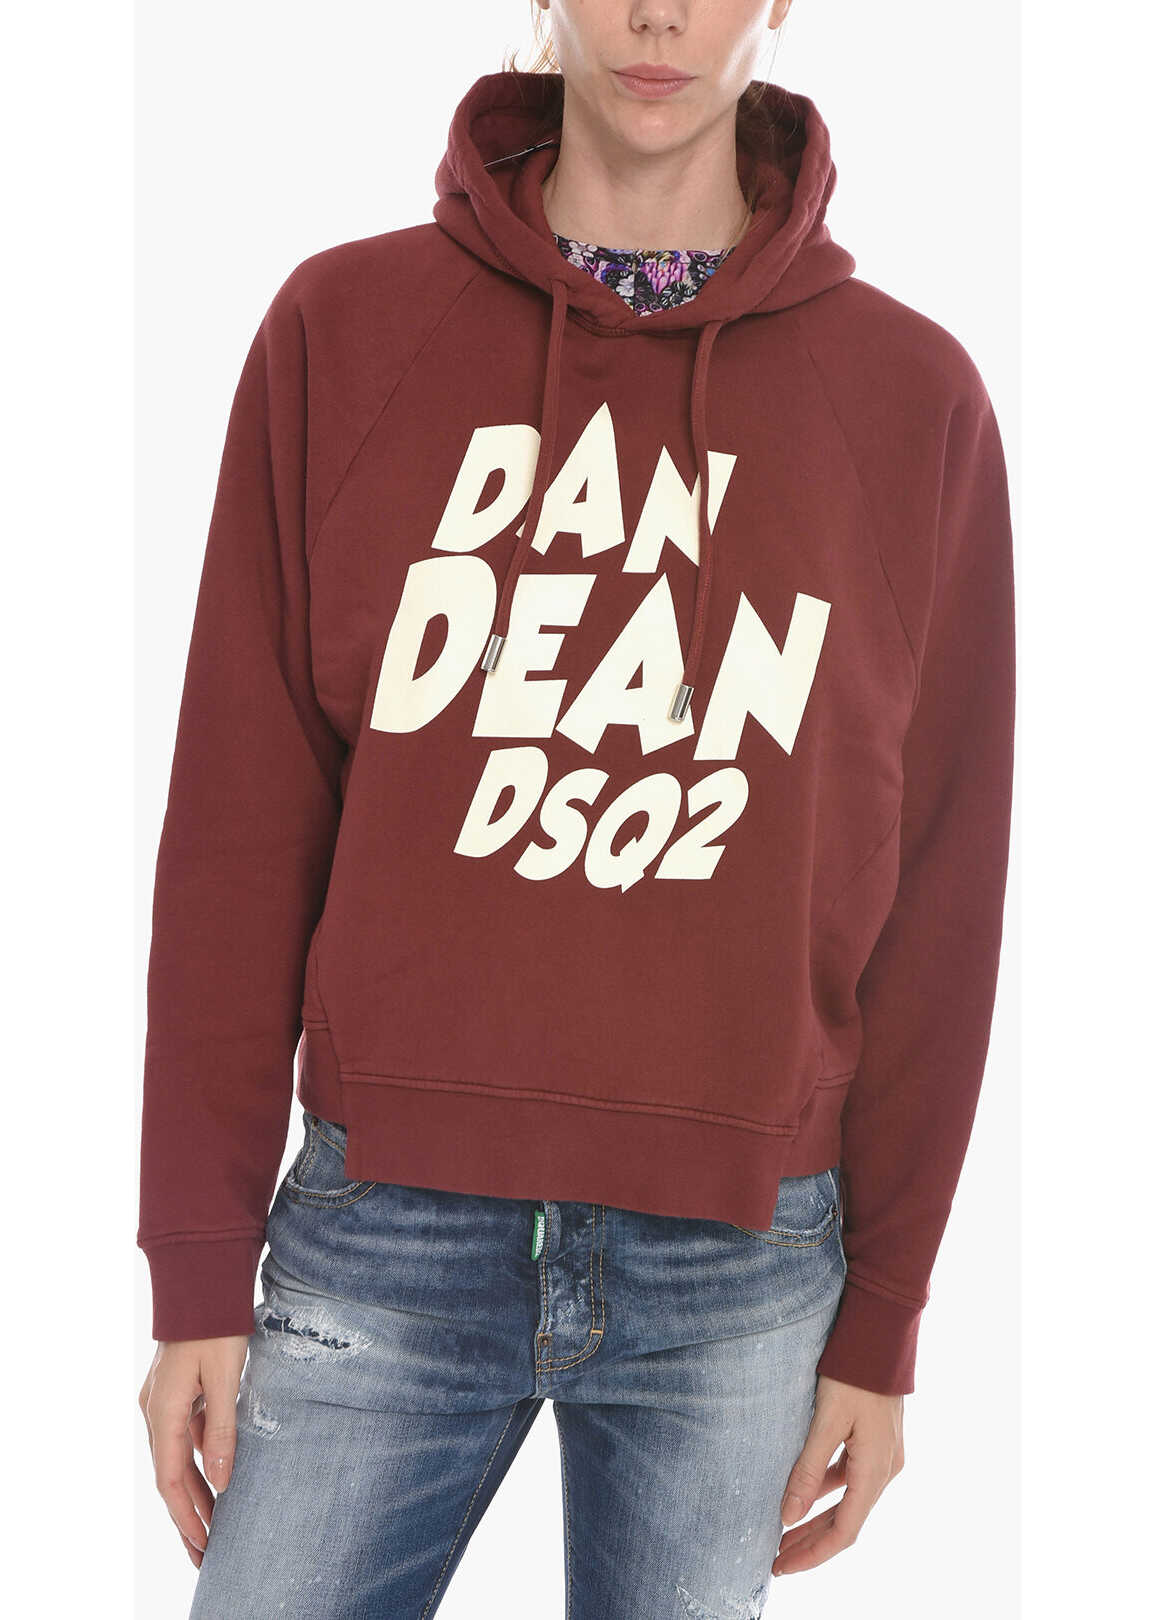 DSQUARED2 Dan Dean Crewneck Sweatshirt With Print Burgundy